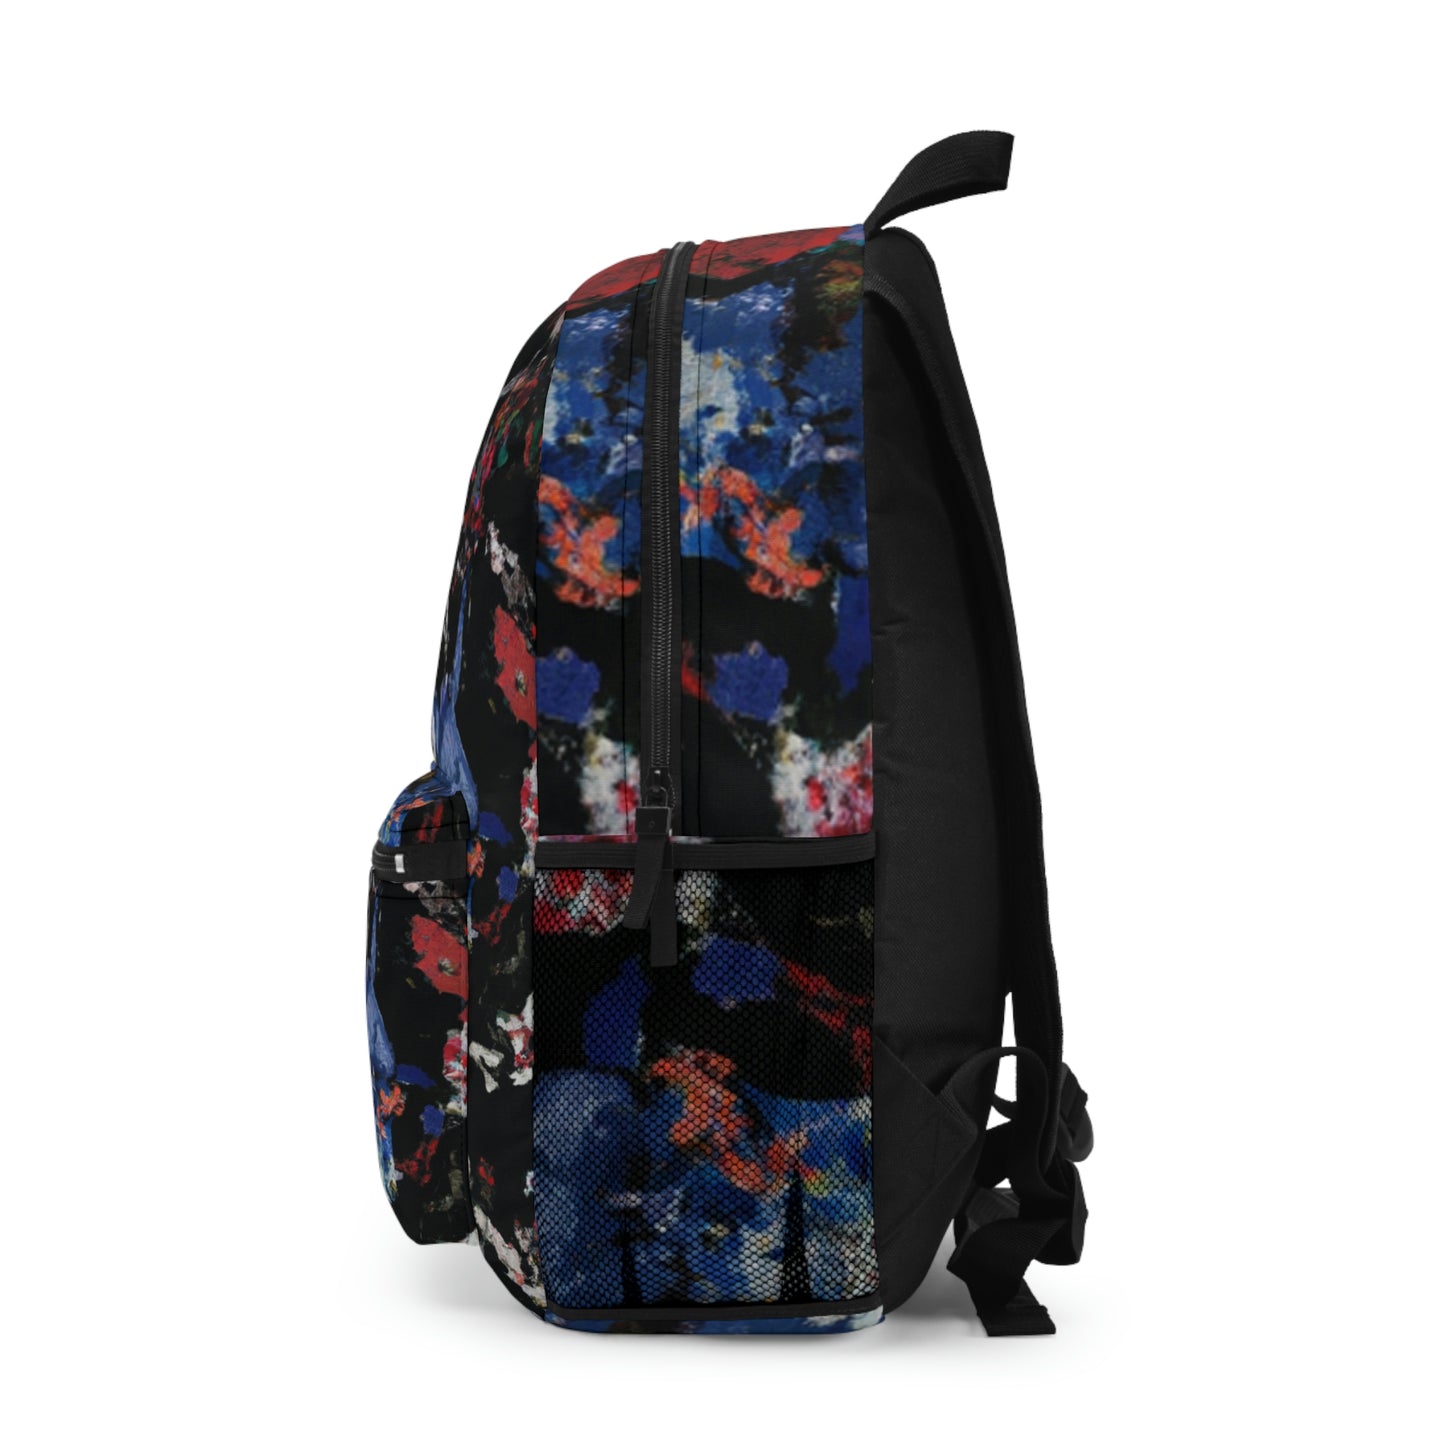 Prentise Regala  Backpack